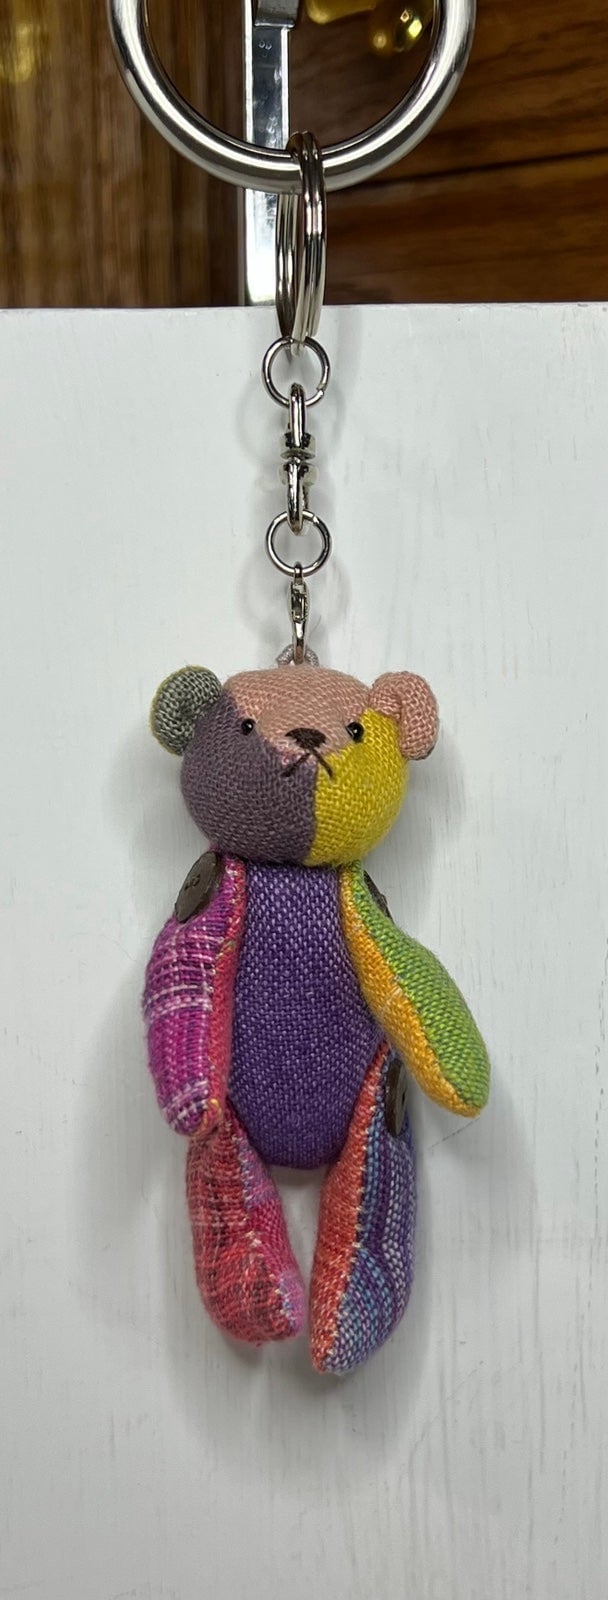 Teddy Bear Jointed Stuffed Animal Bag Charm/Keychain BckMMFM3O